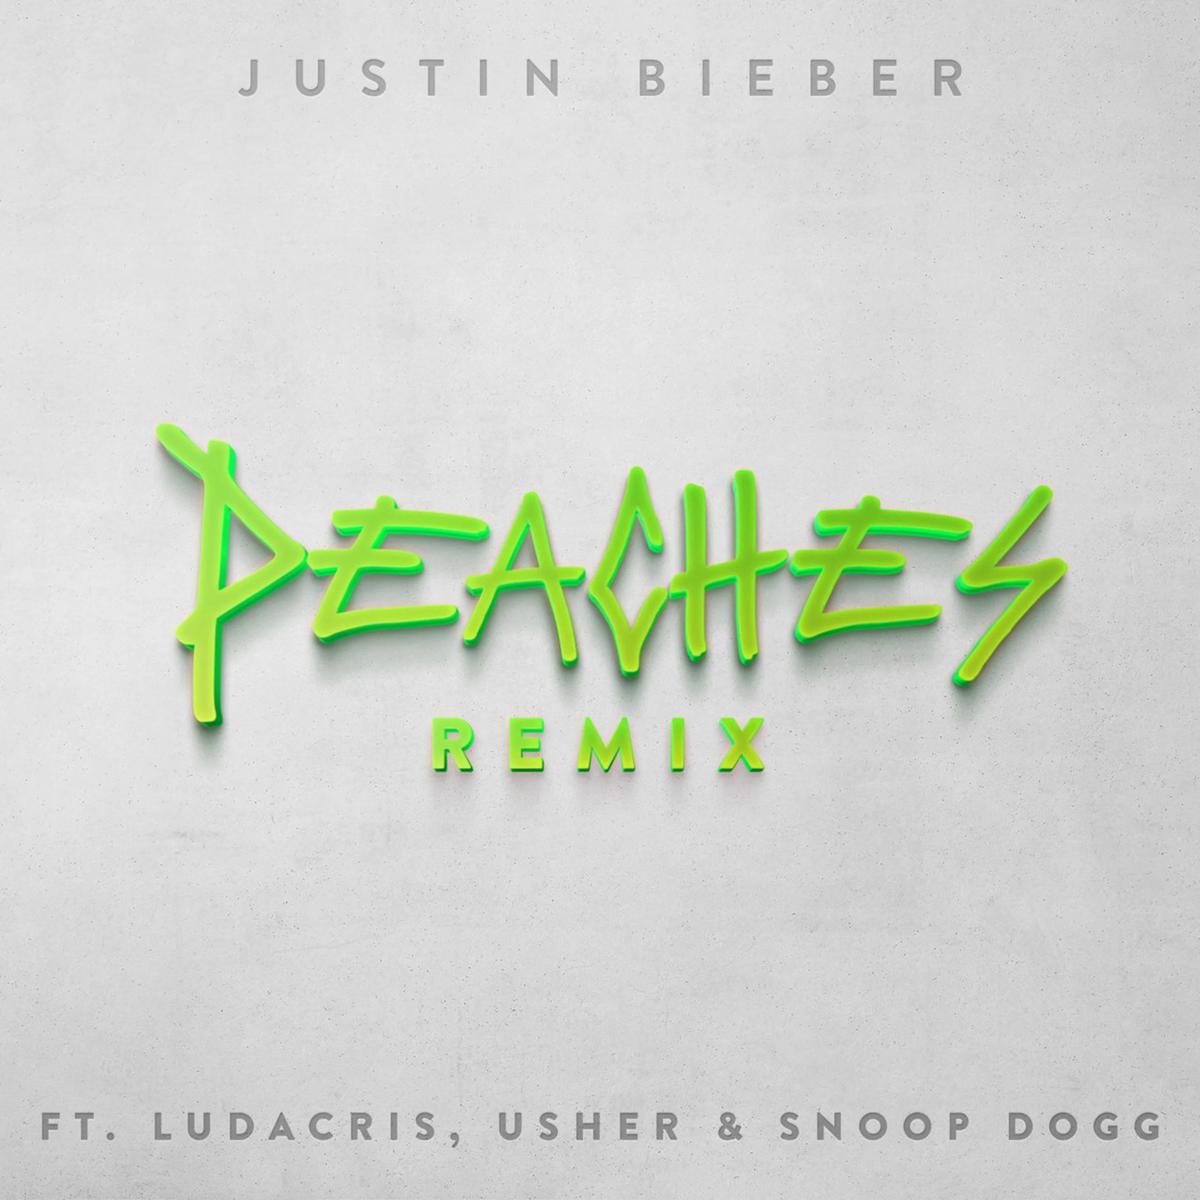 Justin Bieber Adds Snoop Dogg, Usher & Ludacris To “Peaches Remix”